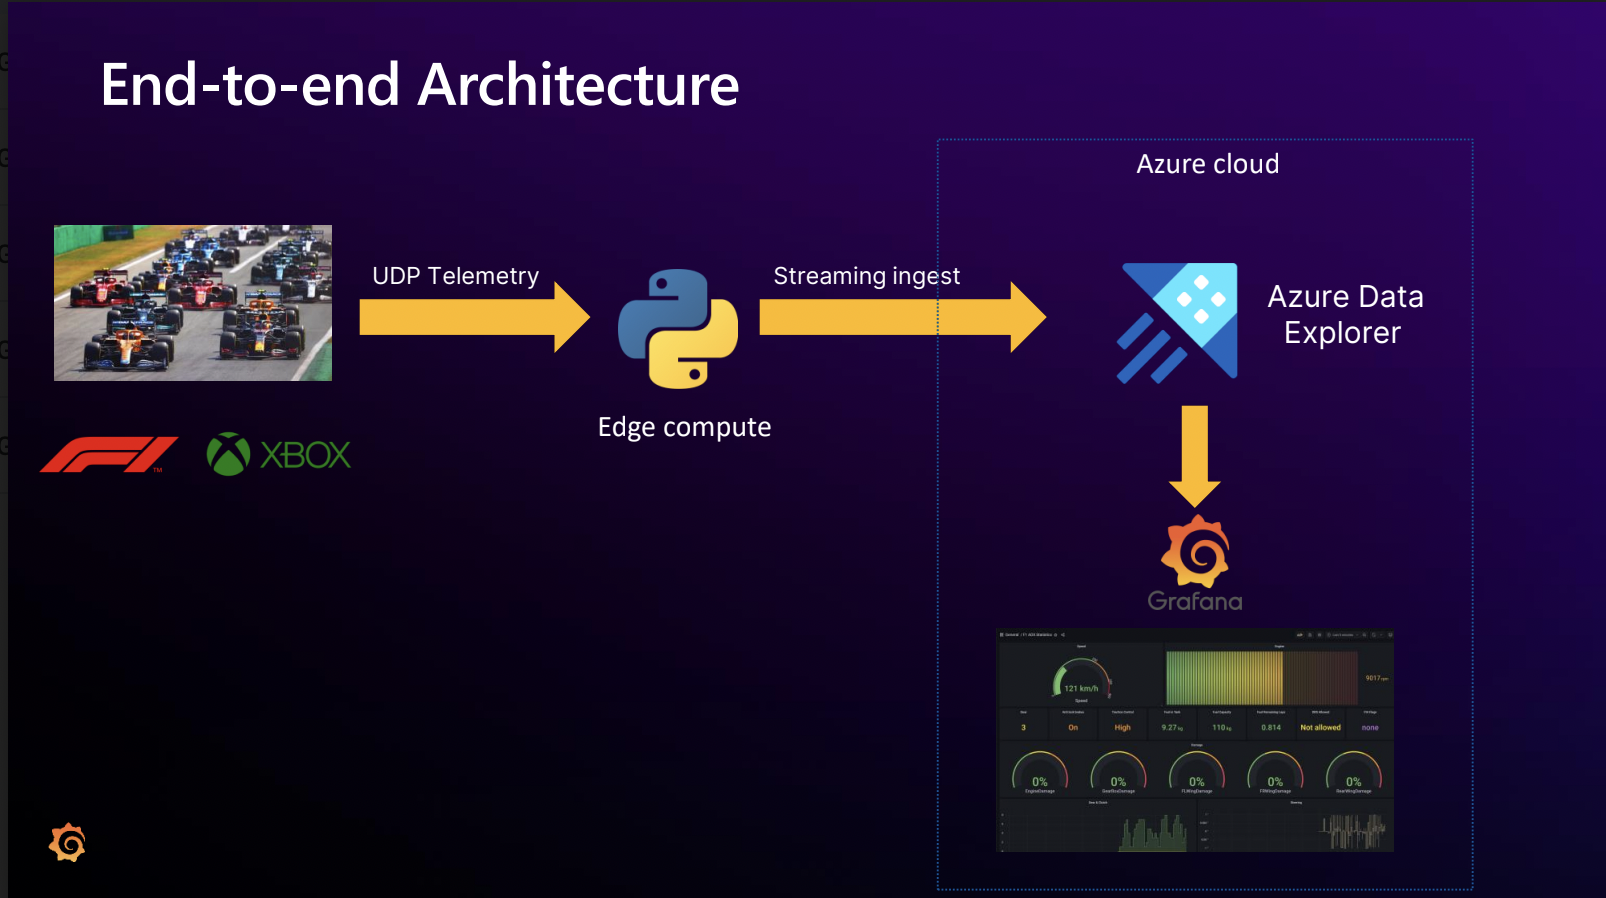 Architecture diagram for Microsoft ADX session at GrafanaCONline